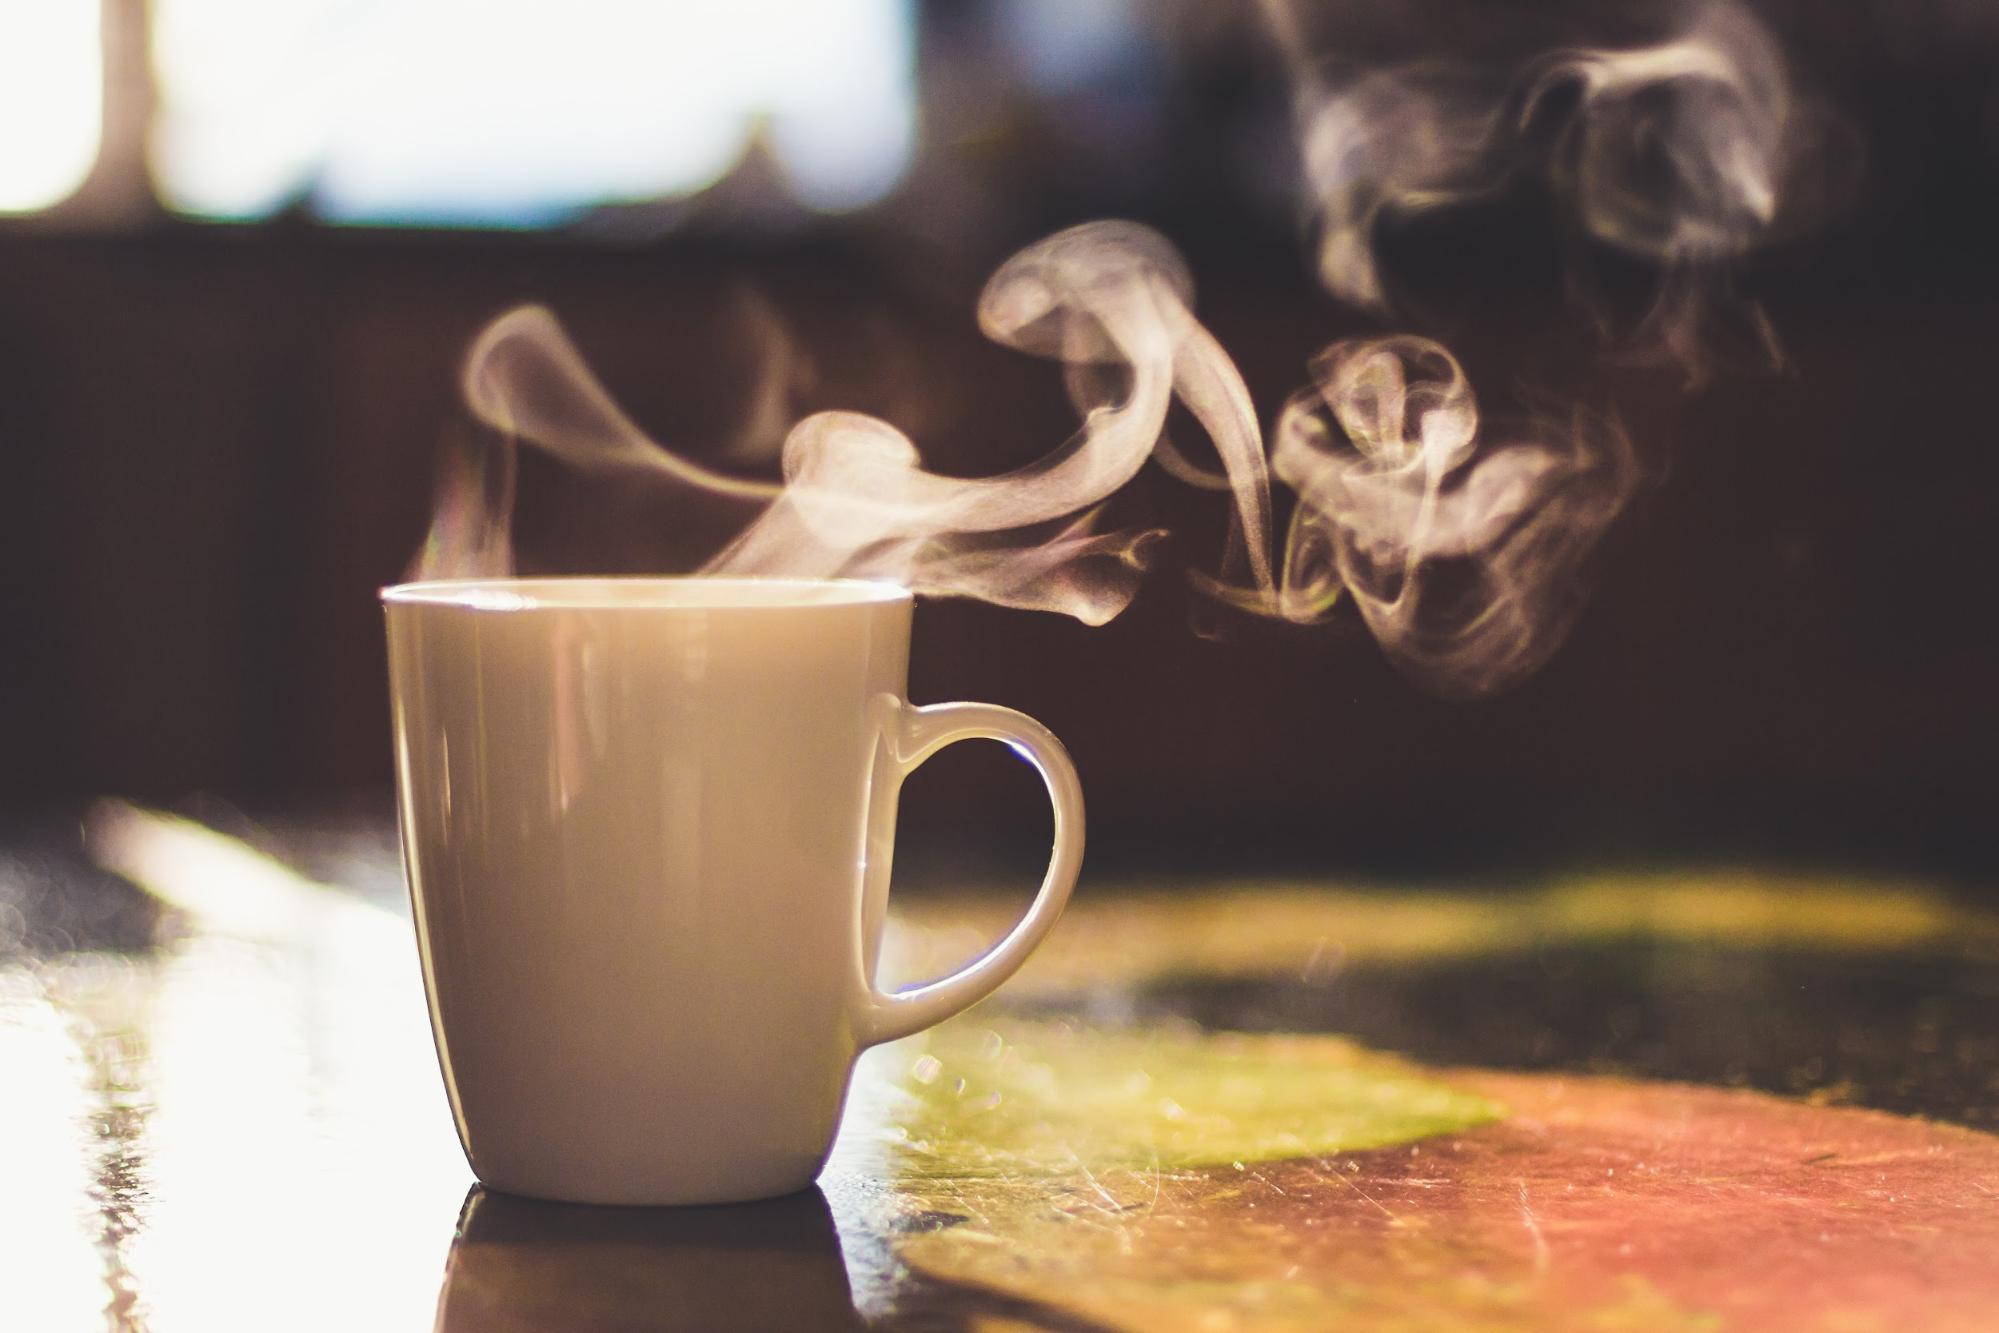 steam coming off mug of coffee